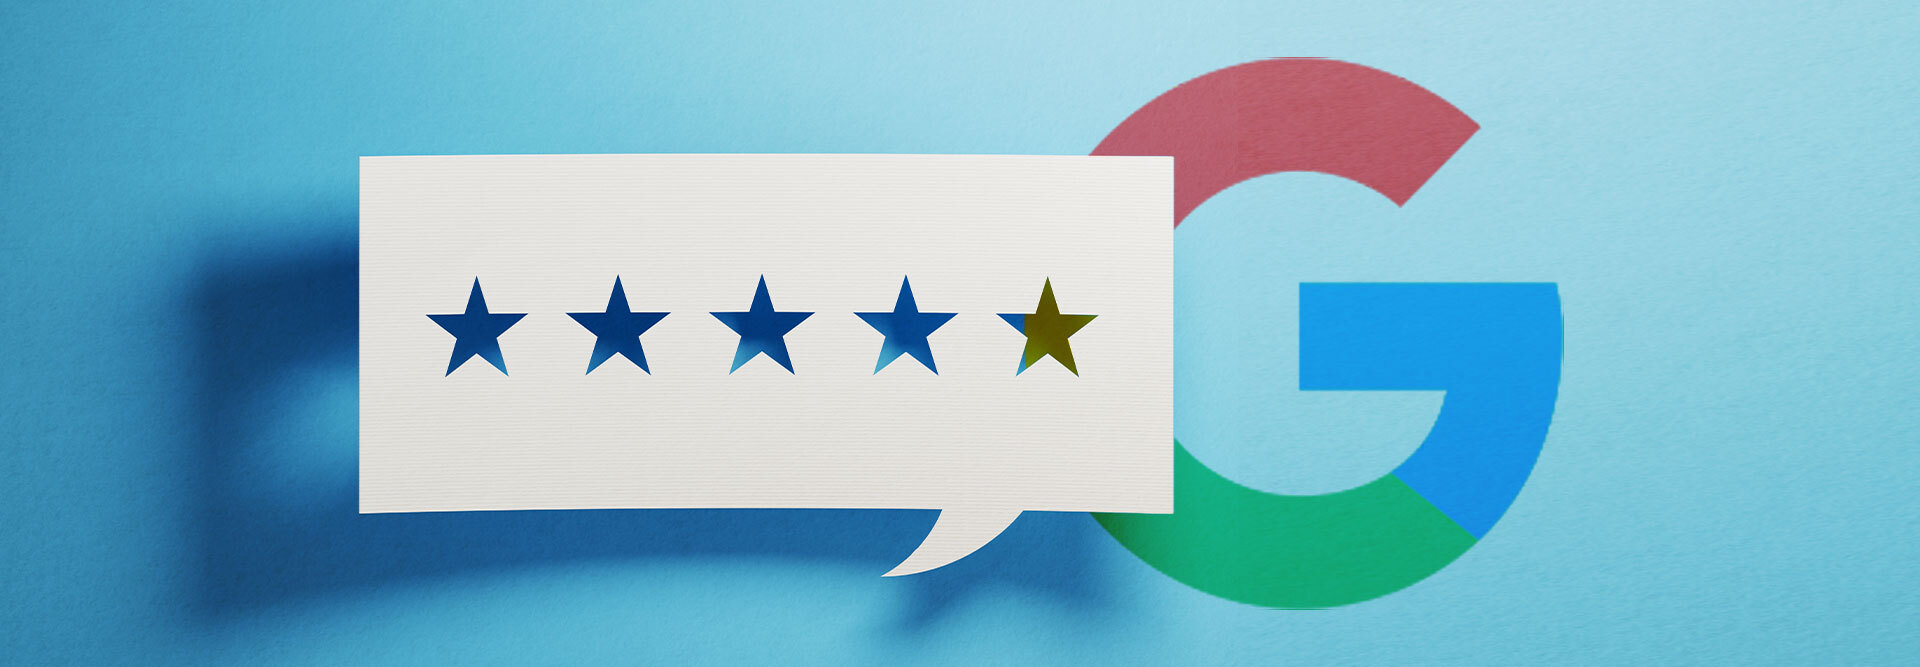 Google Review Management: 5 Ways to Succeed | Vendasta